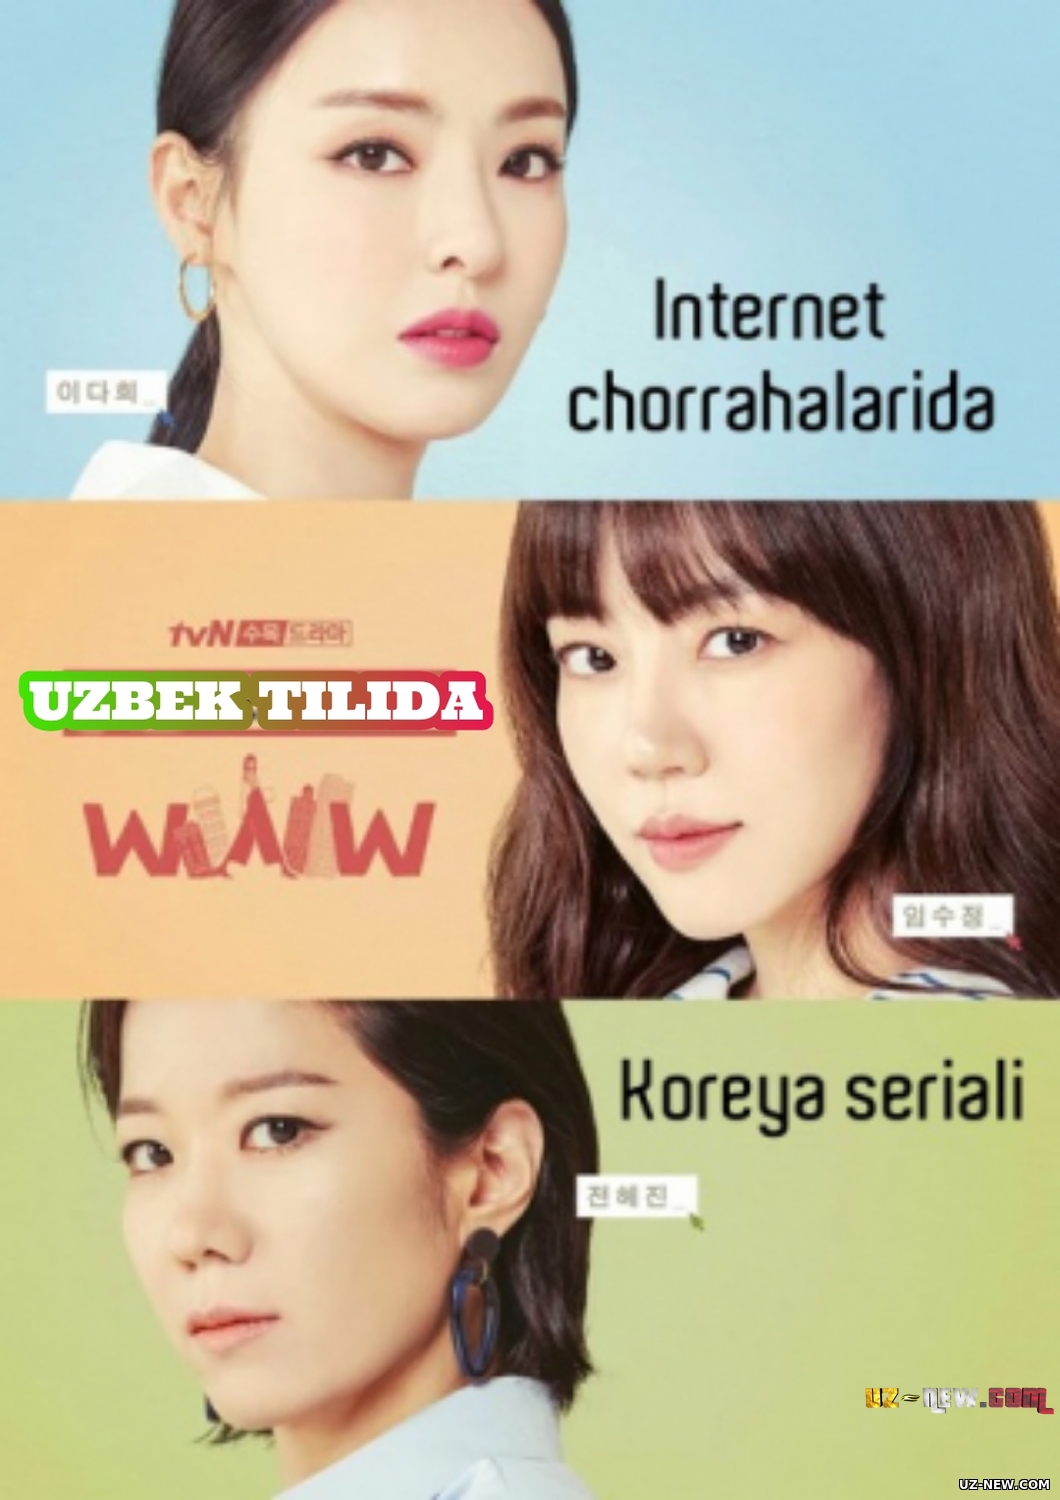 Internet chorrahalarida Koreya seriali